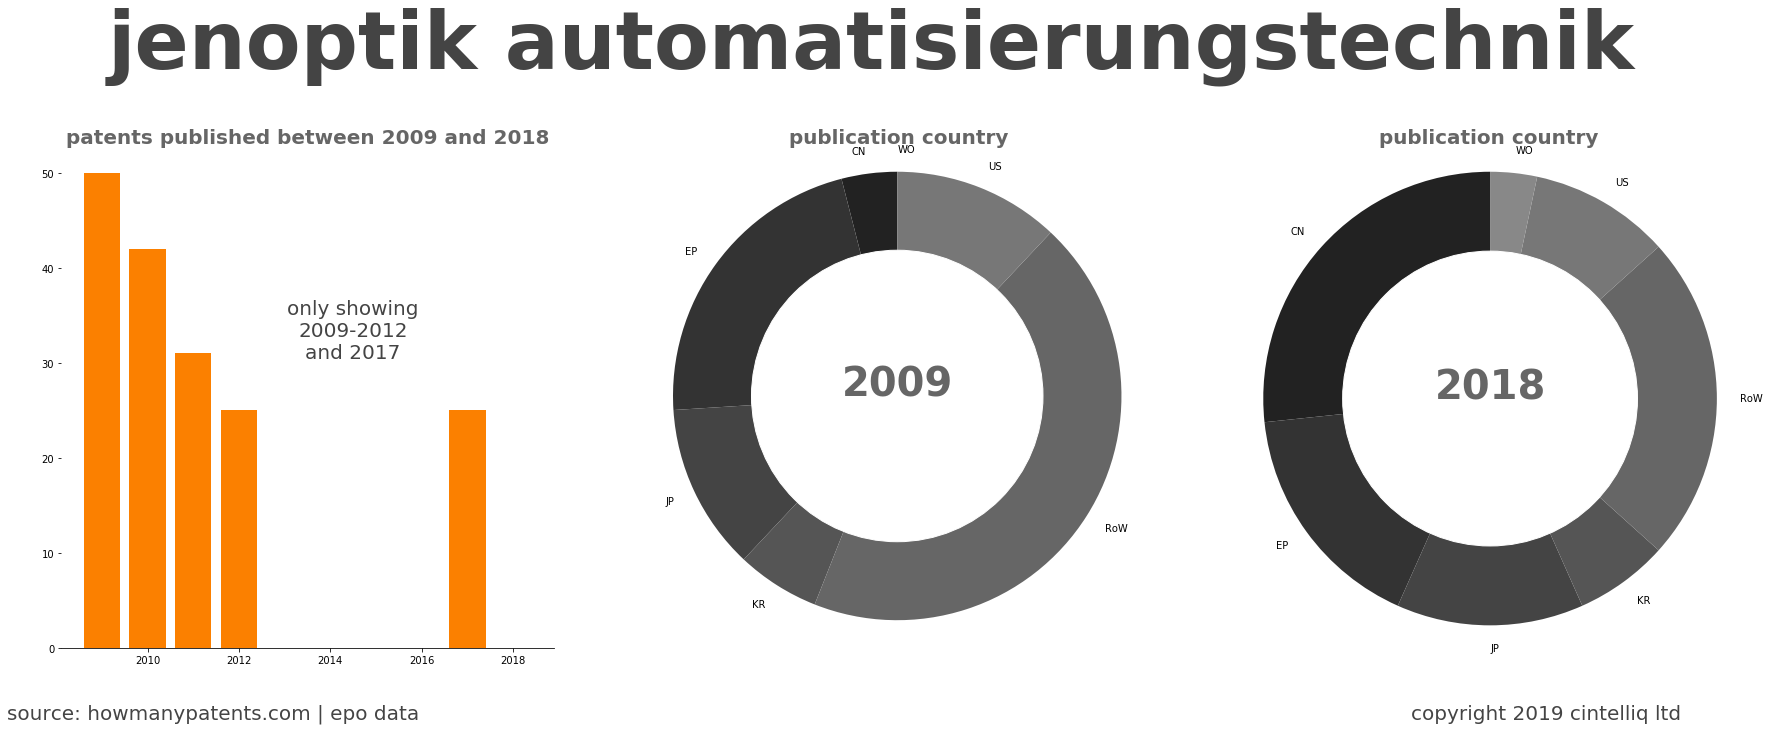 summary of patents for Jenoptik Automatisierungstechnik